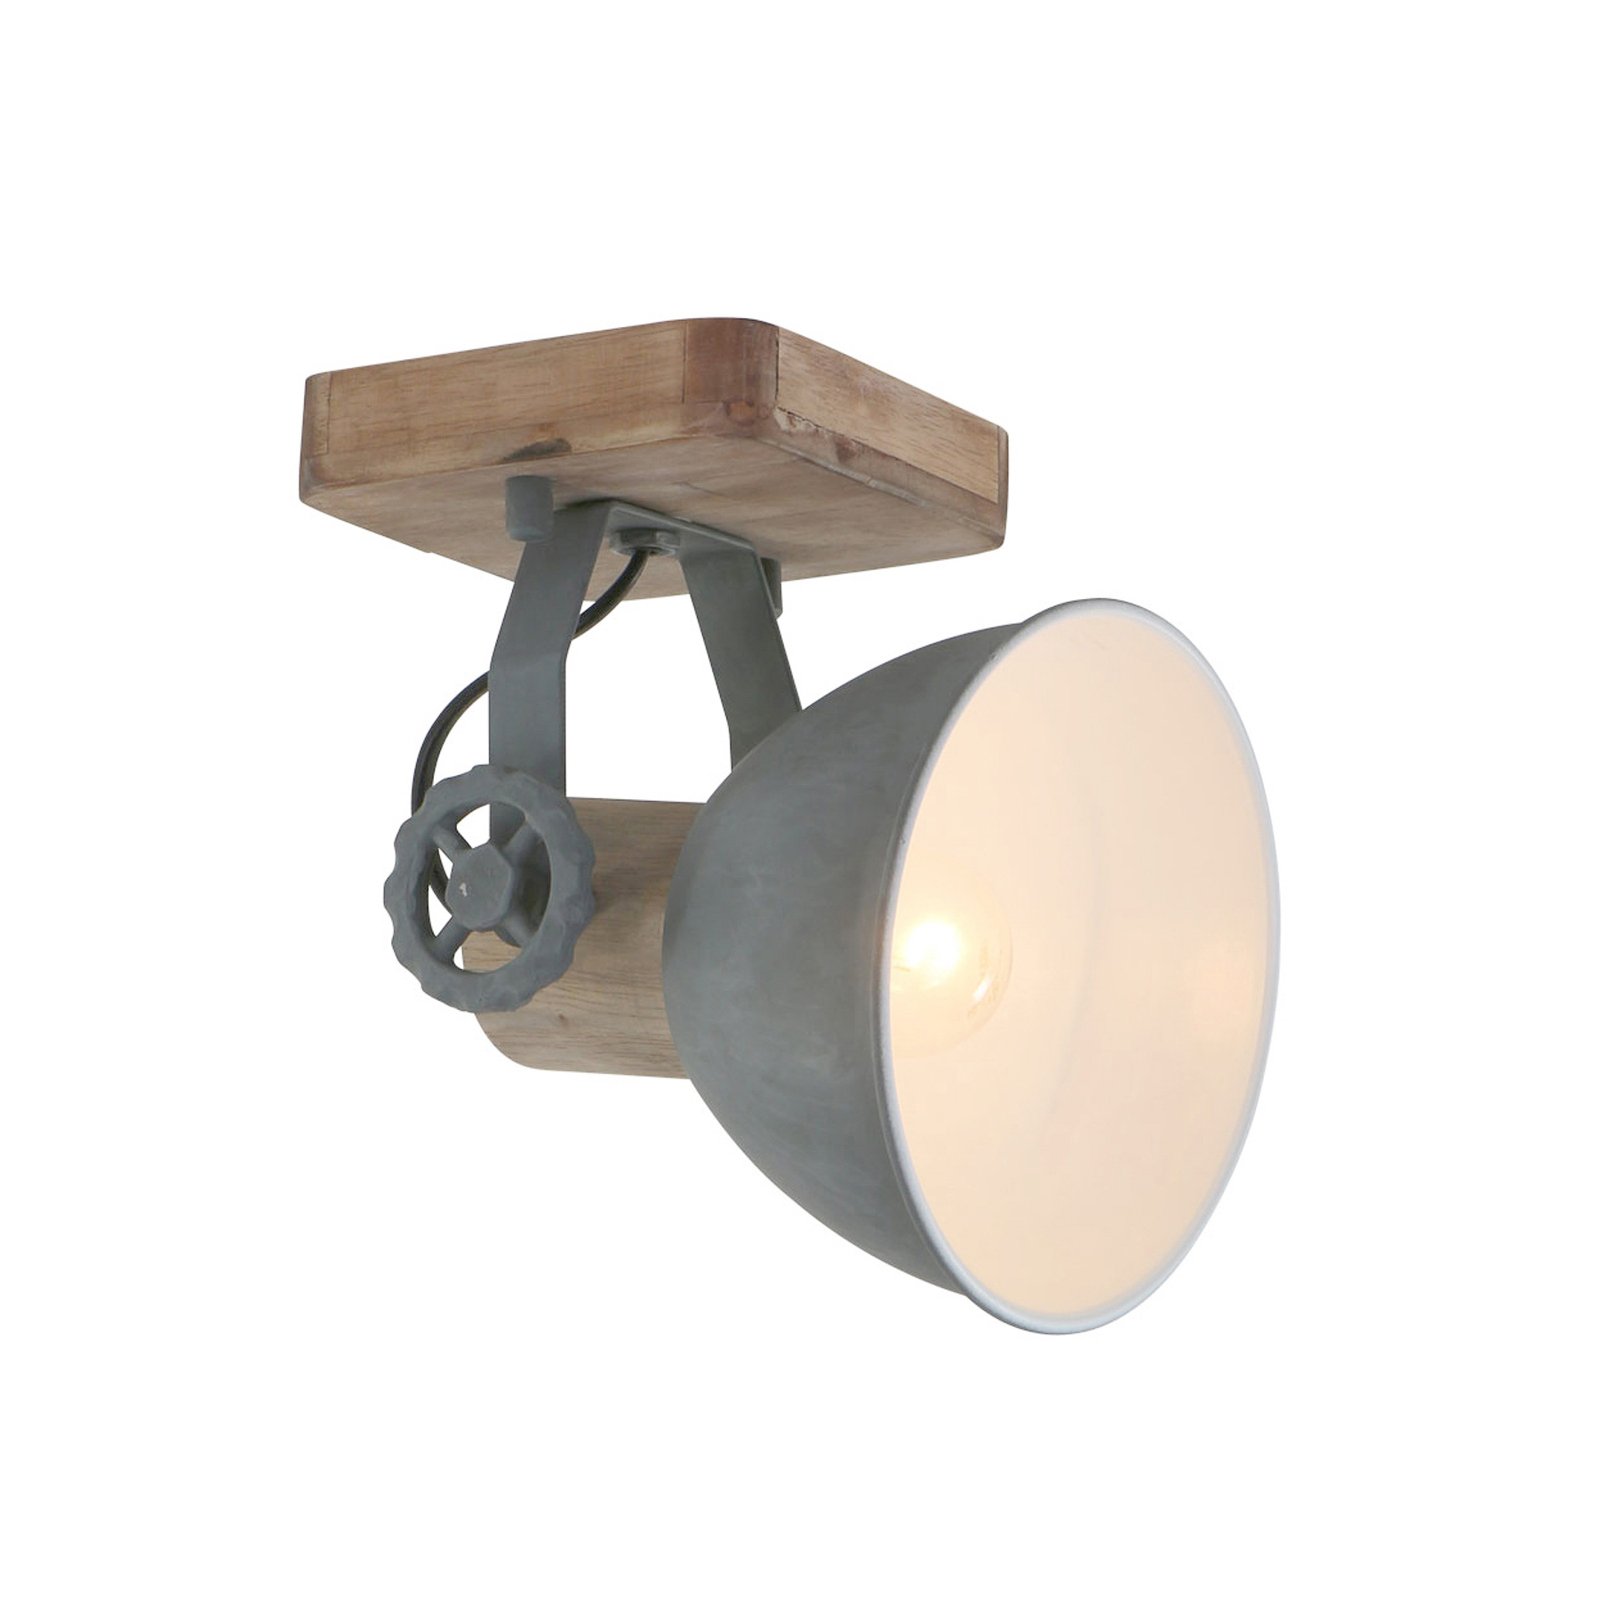 Stropno reflektorsko svetilo Gearwood, 1-svetlobno, sivo